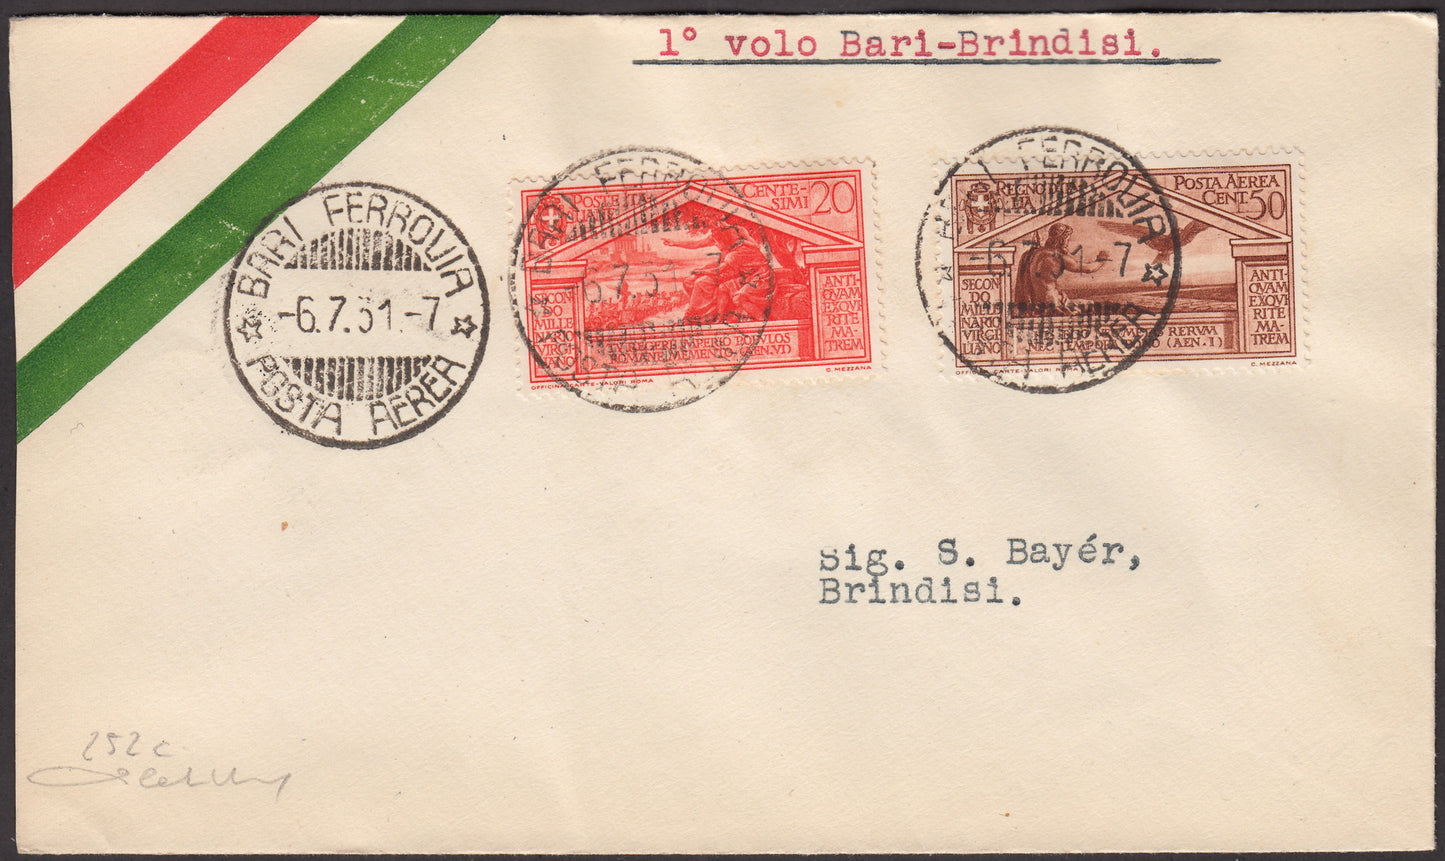 1931 - Primo Volo Bari-Brindisi 6/7/31 affrancato con Virgilio c. 20 arancio + Posta Aerea c. 50 bruno rosso (283 + A21)